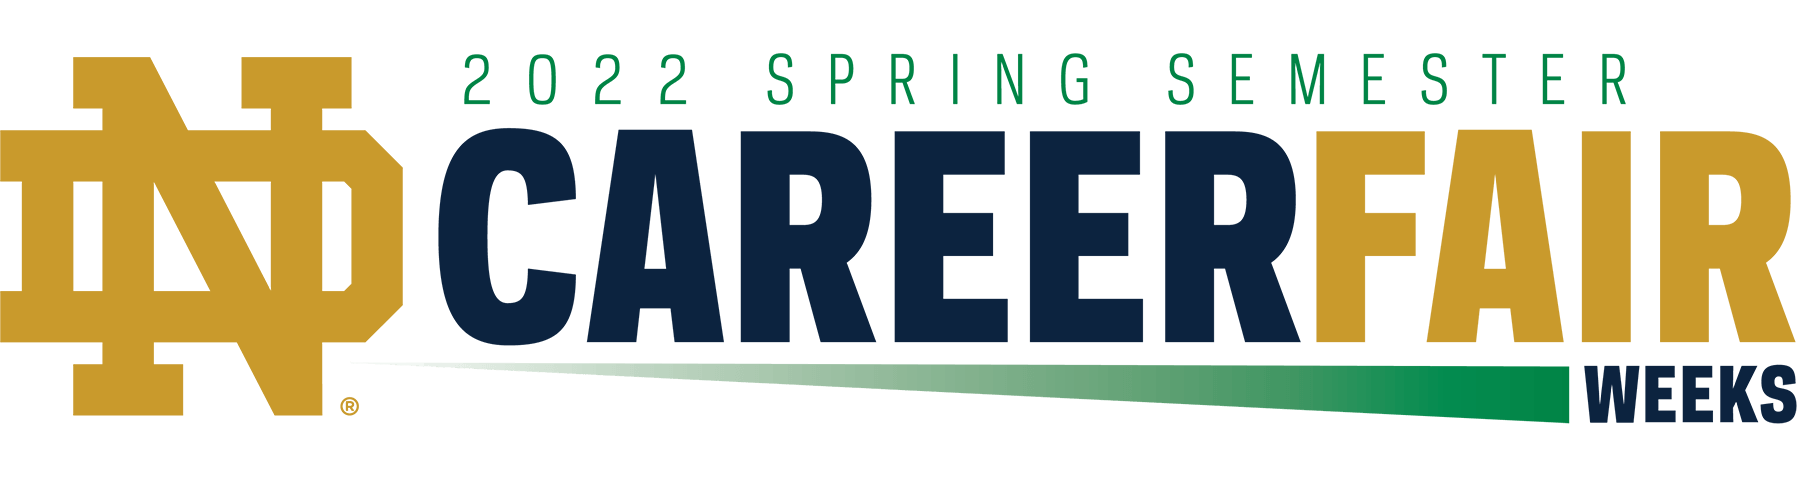 2022 Spring Semester All Colleges Career Fair Weeks Logo